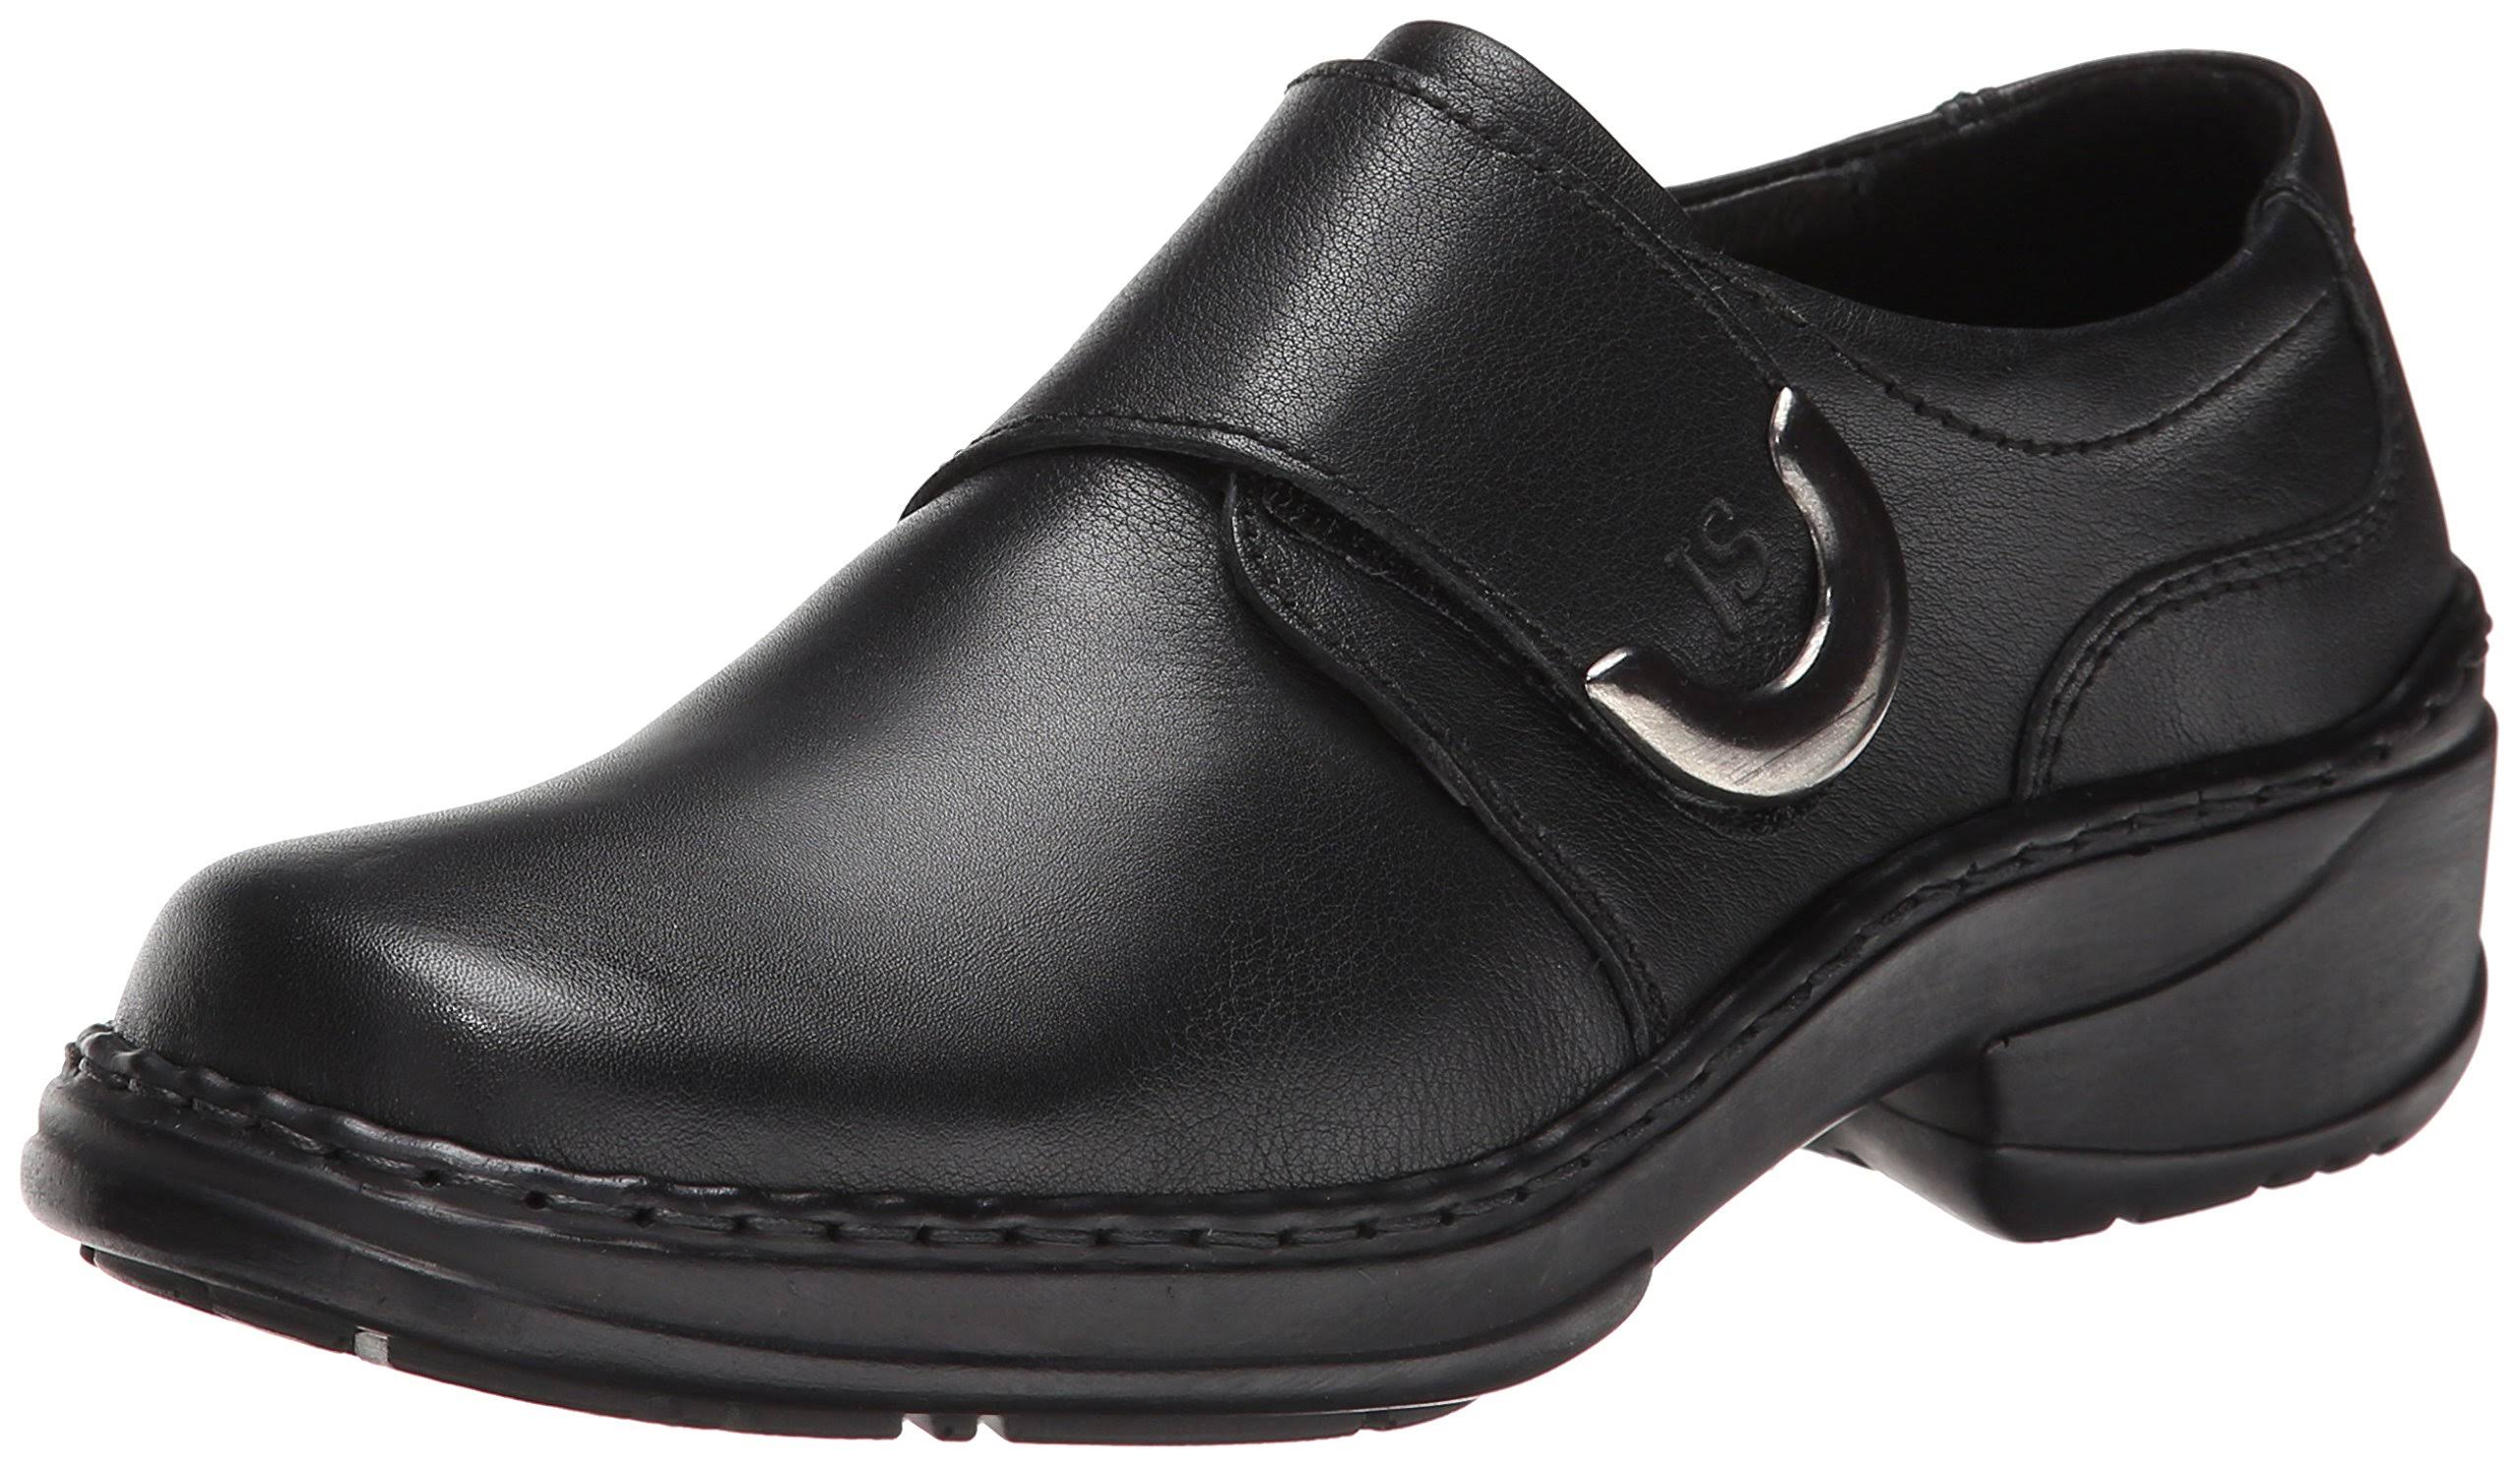 Josef Seibel Women's Theresa Oxford Shoes - Black, 6 US